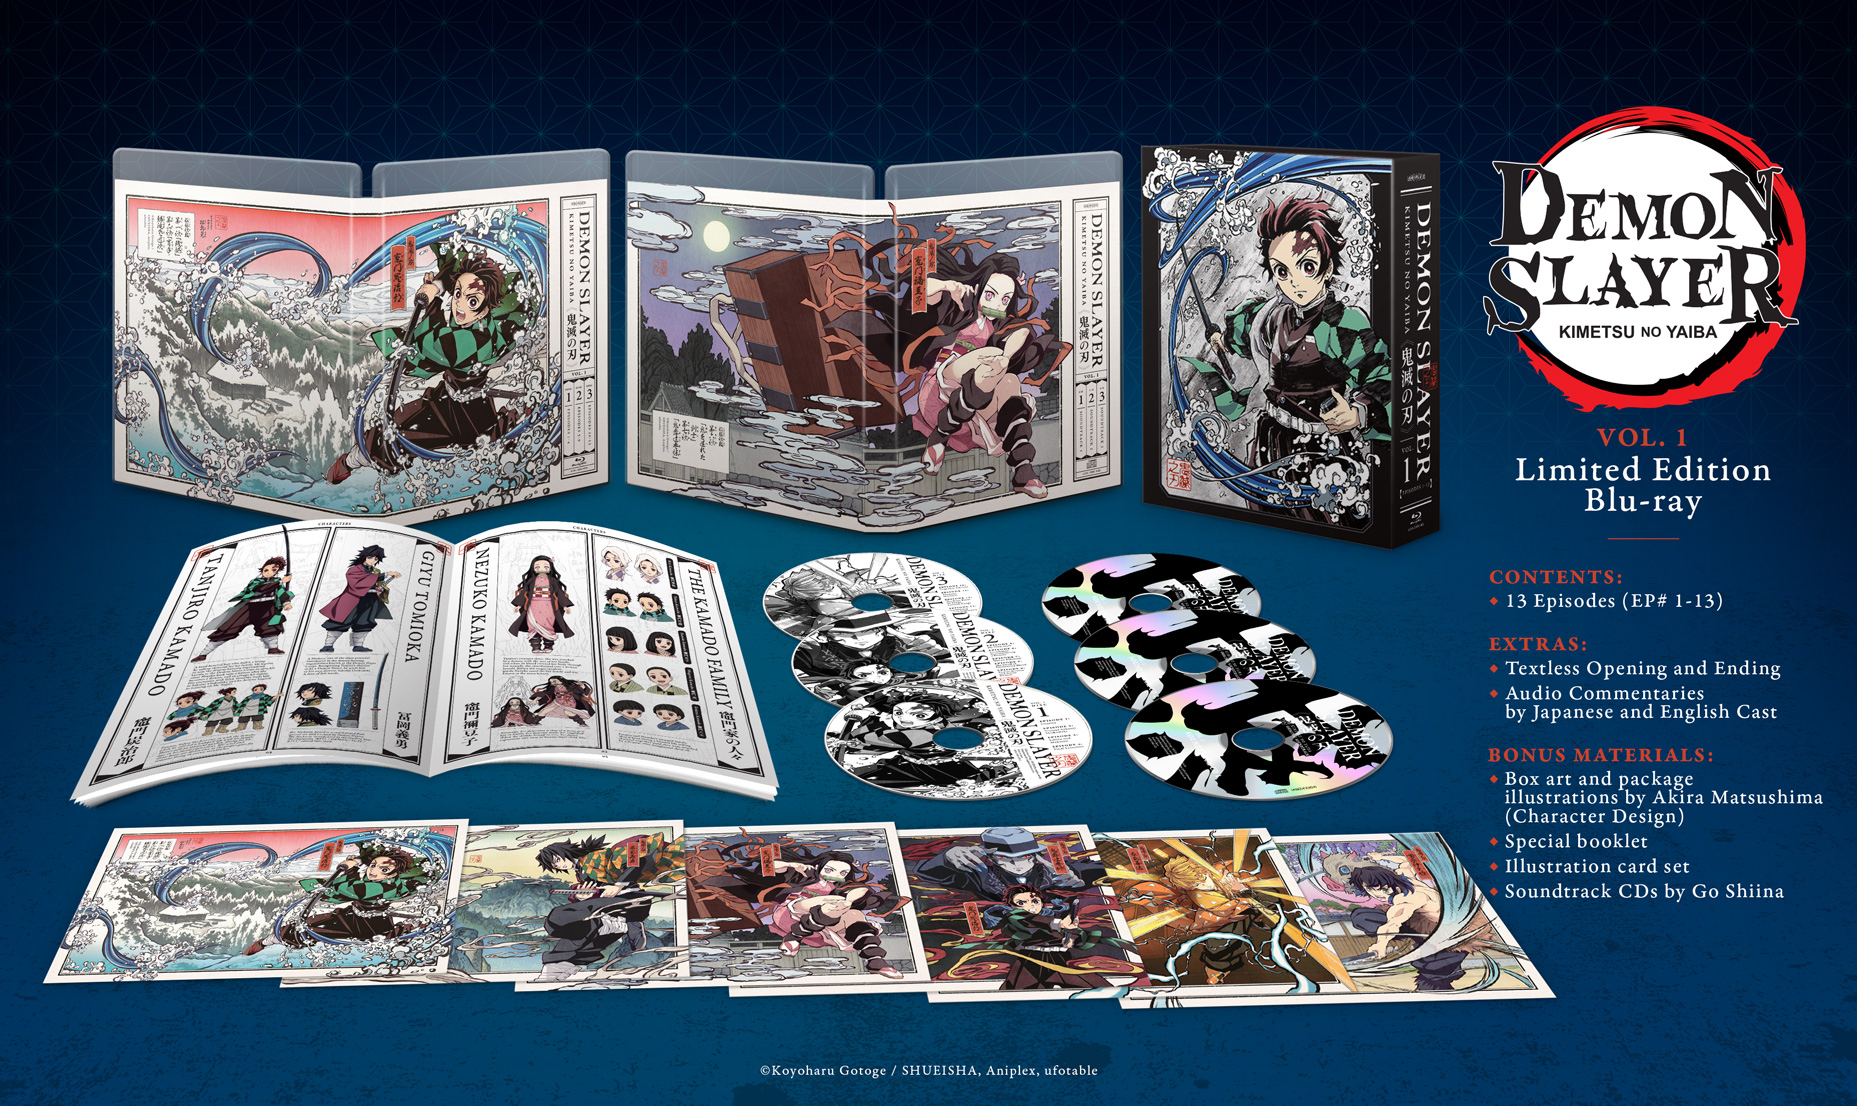 First 'Asterisk War' Second Season Japanese Anime DVD/BD Cover Artwork  Revealed